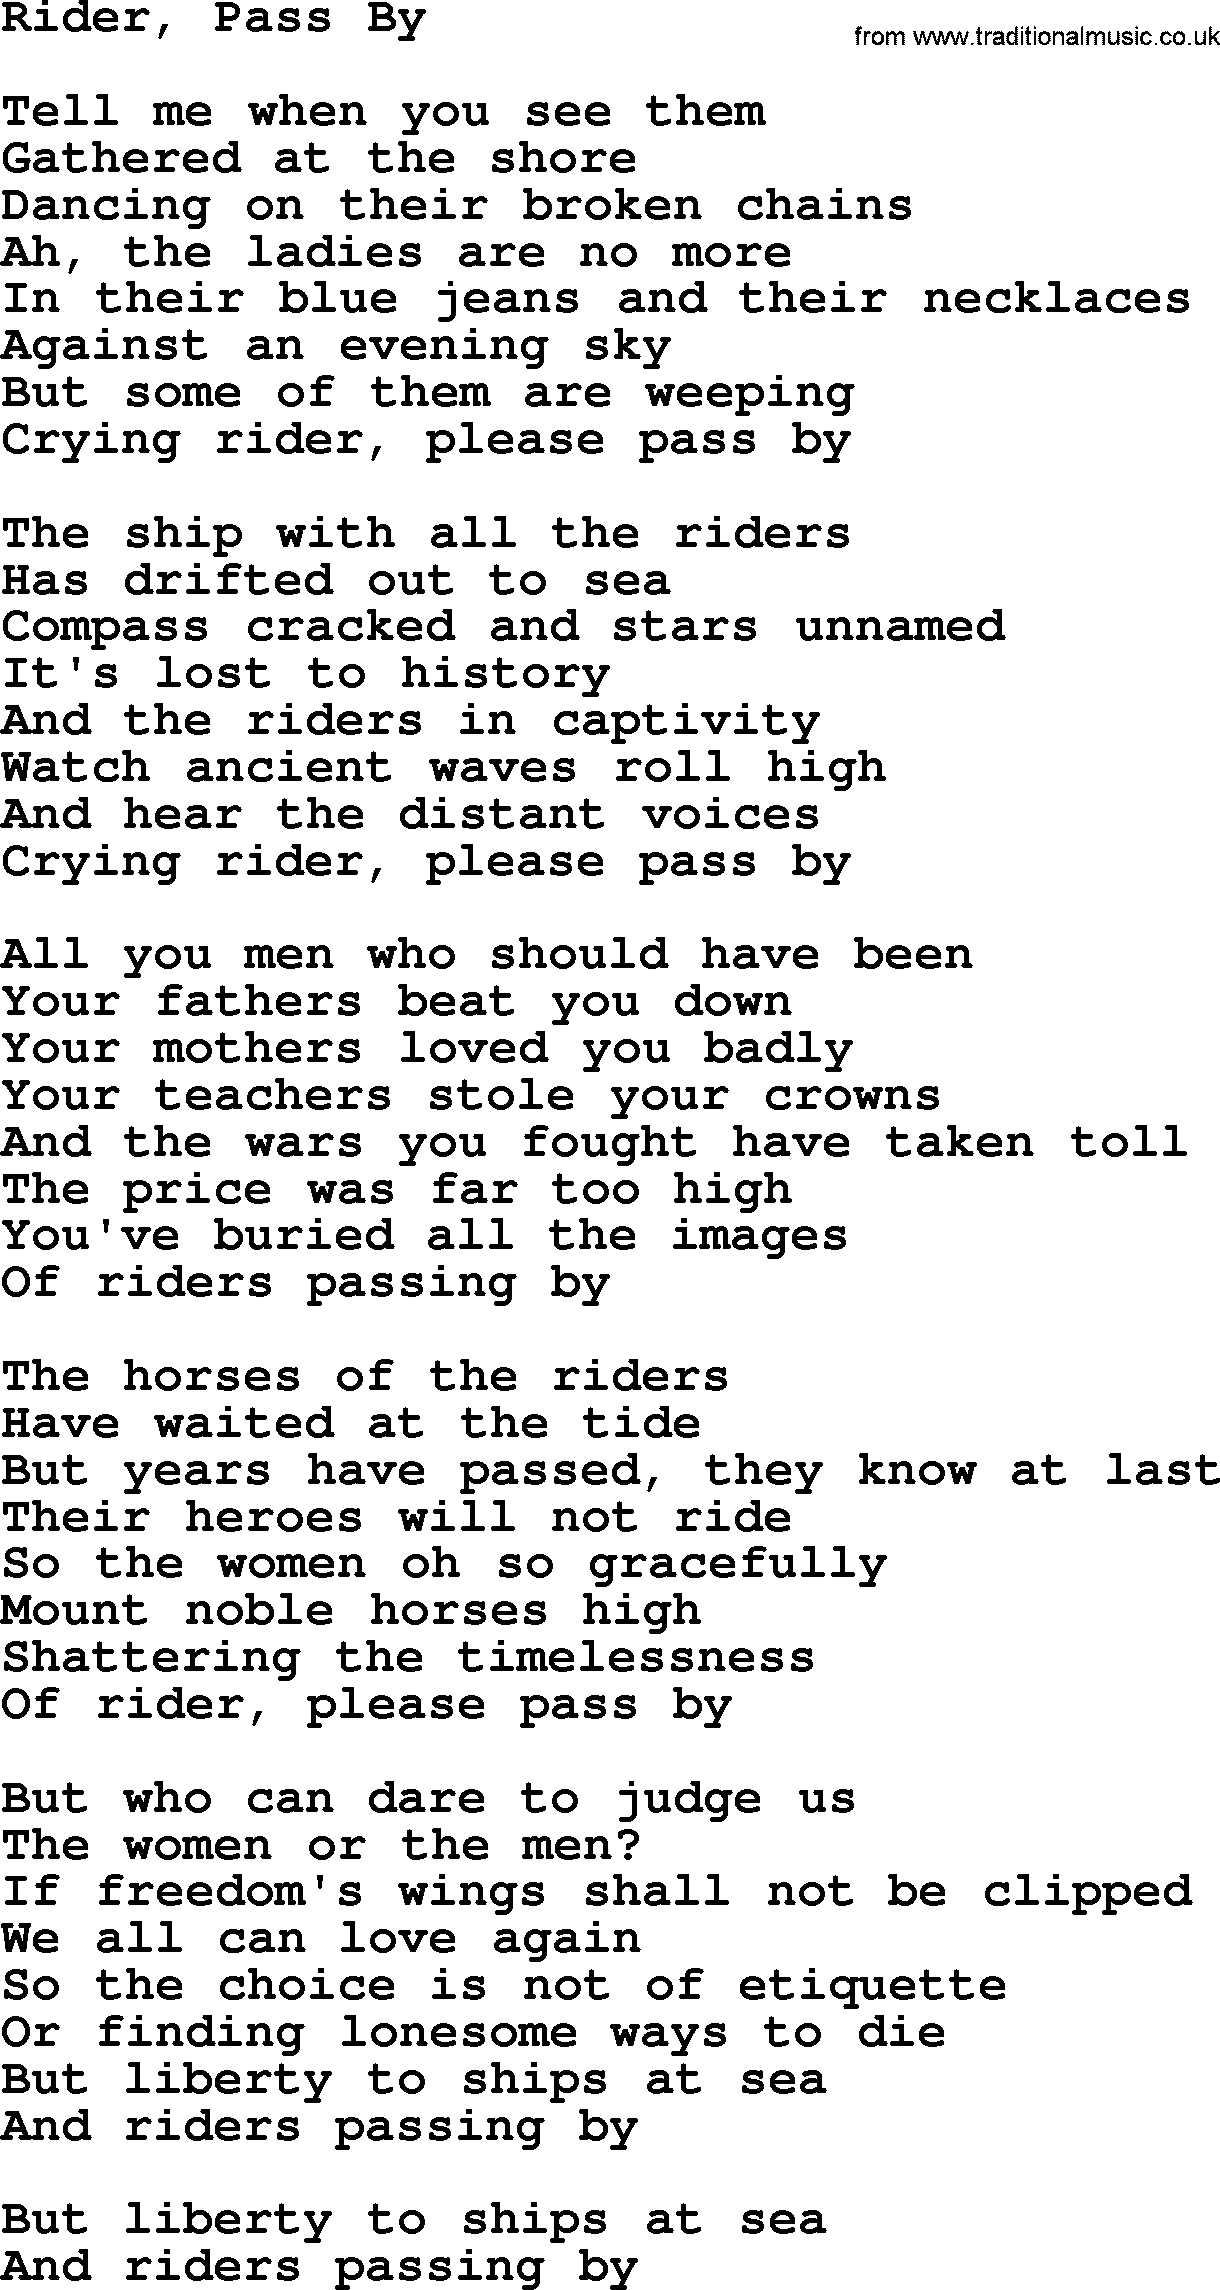 Joan Baez song Rider, Pass By, lyrics